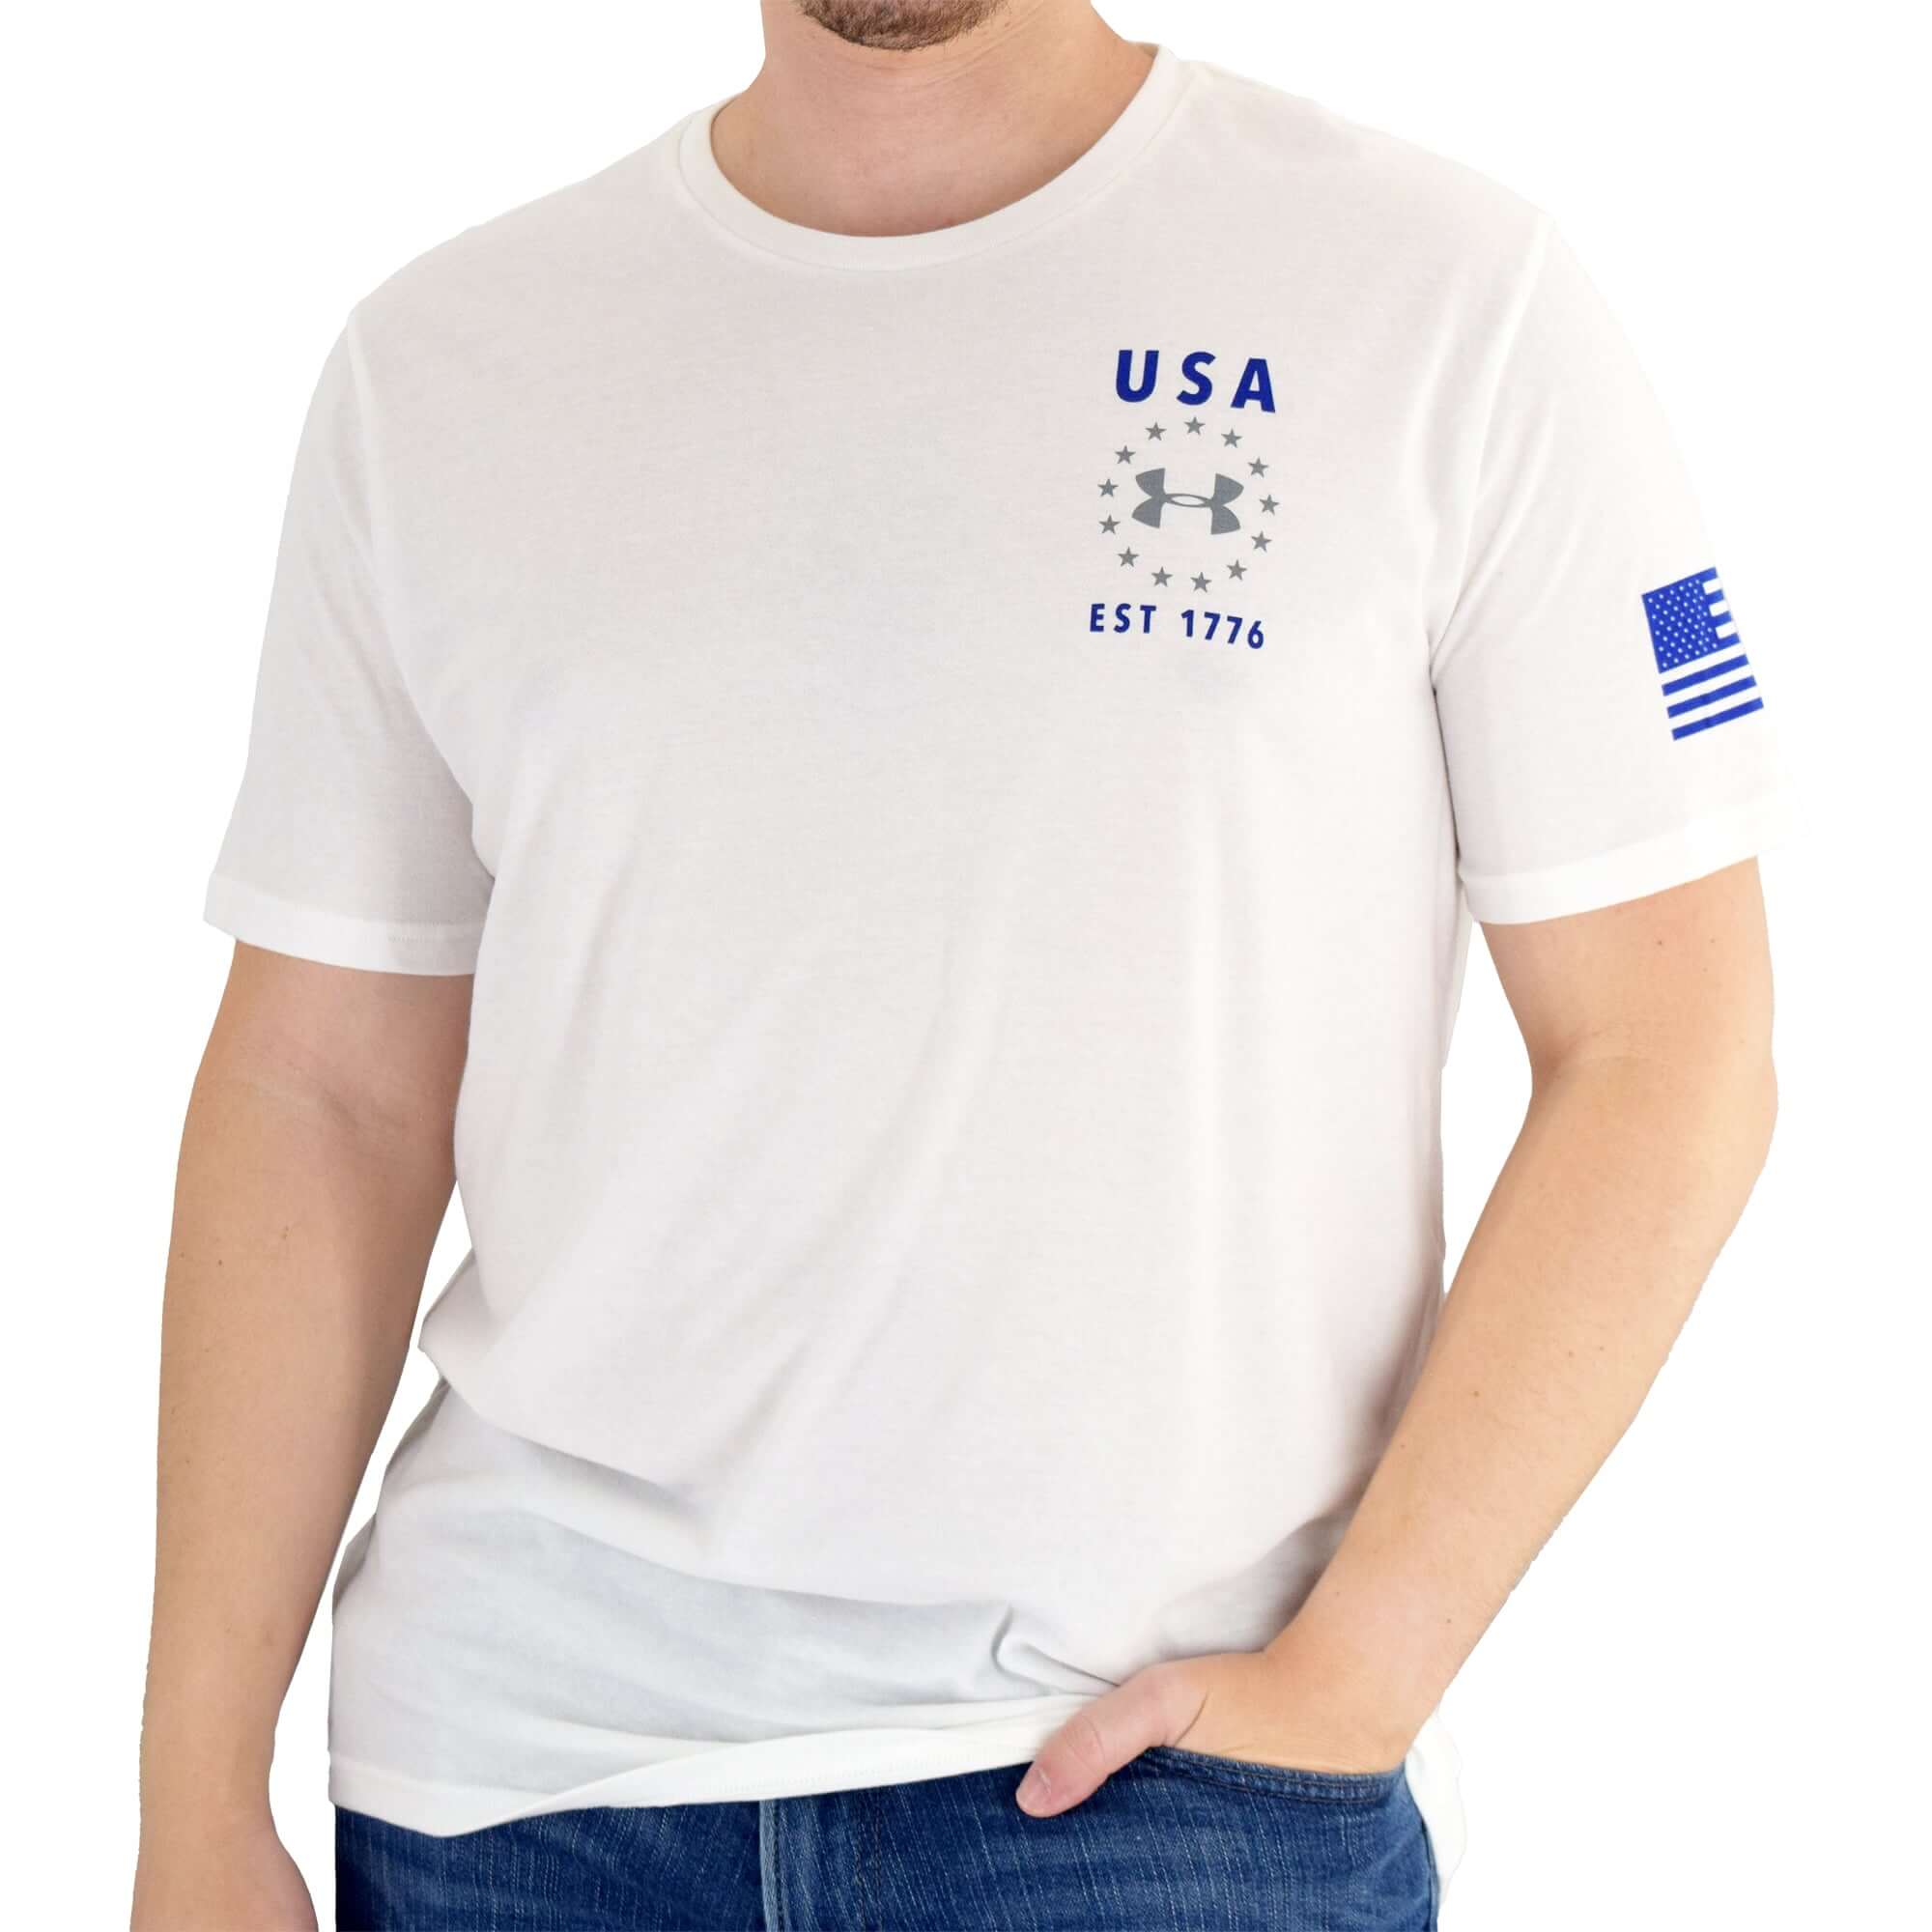 Under Armour USA Emblem T-Shirt The Flag Shirt